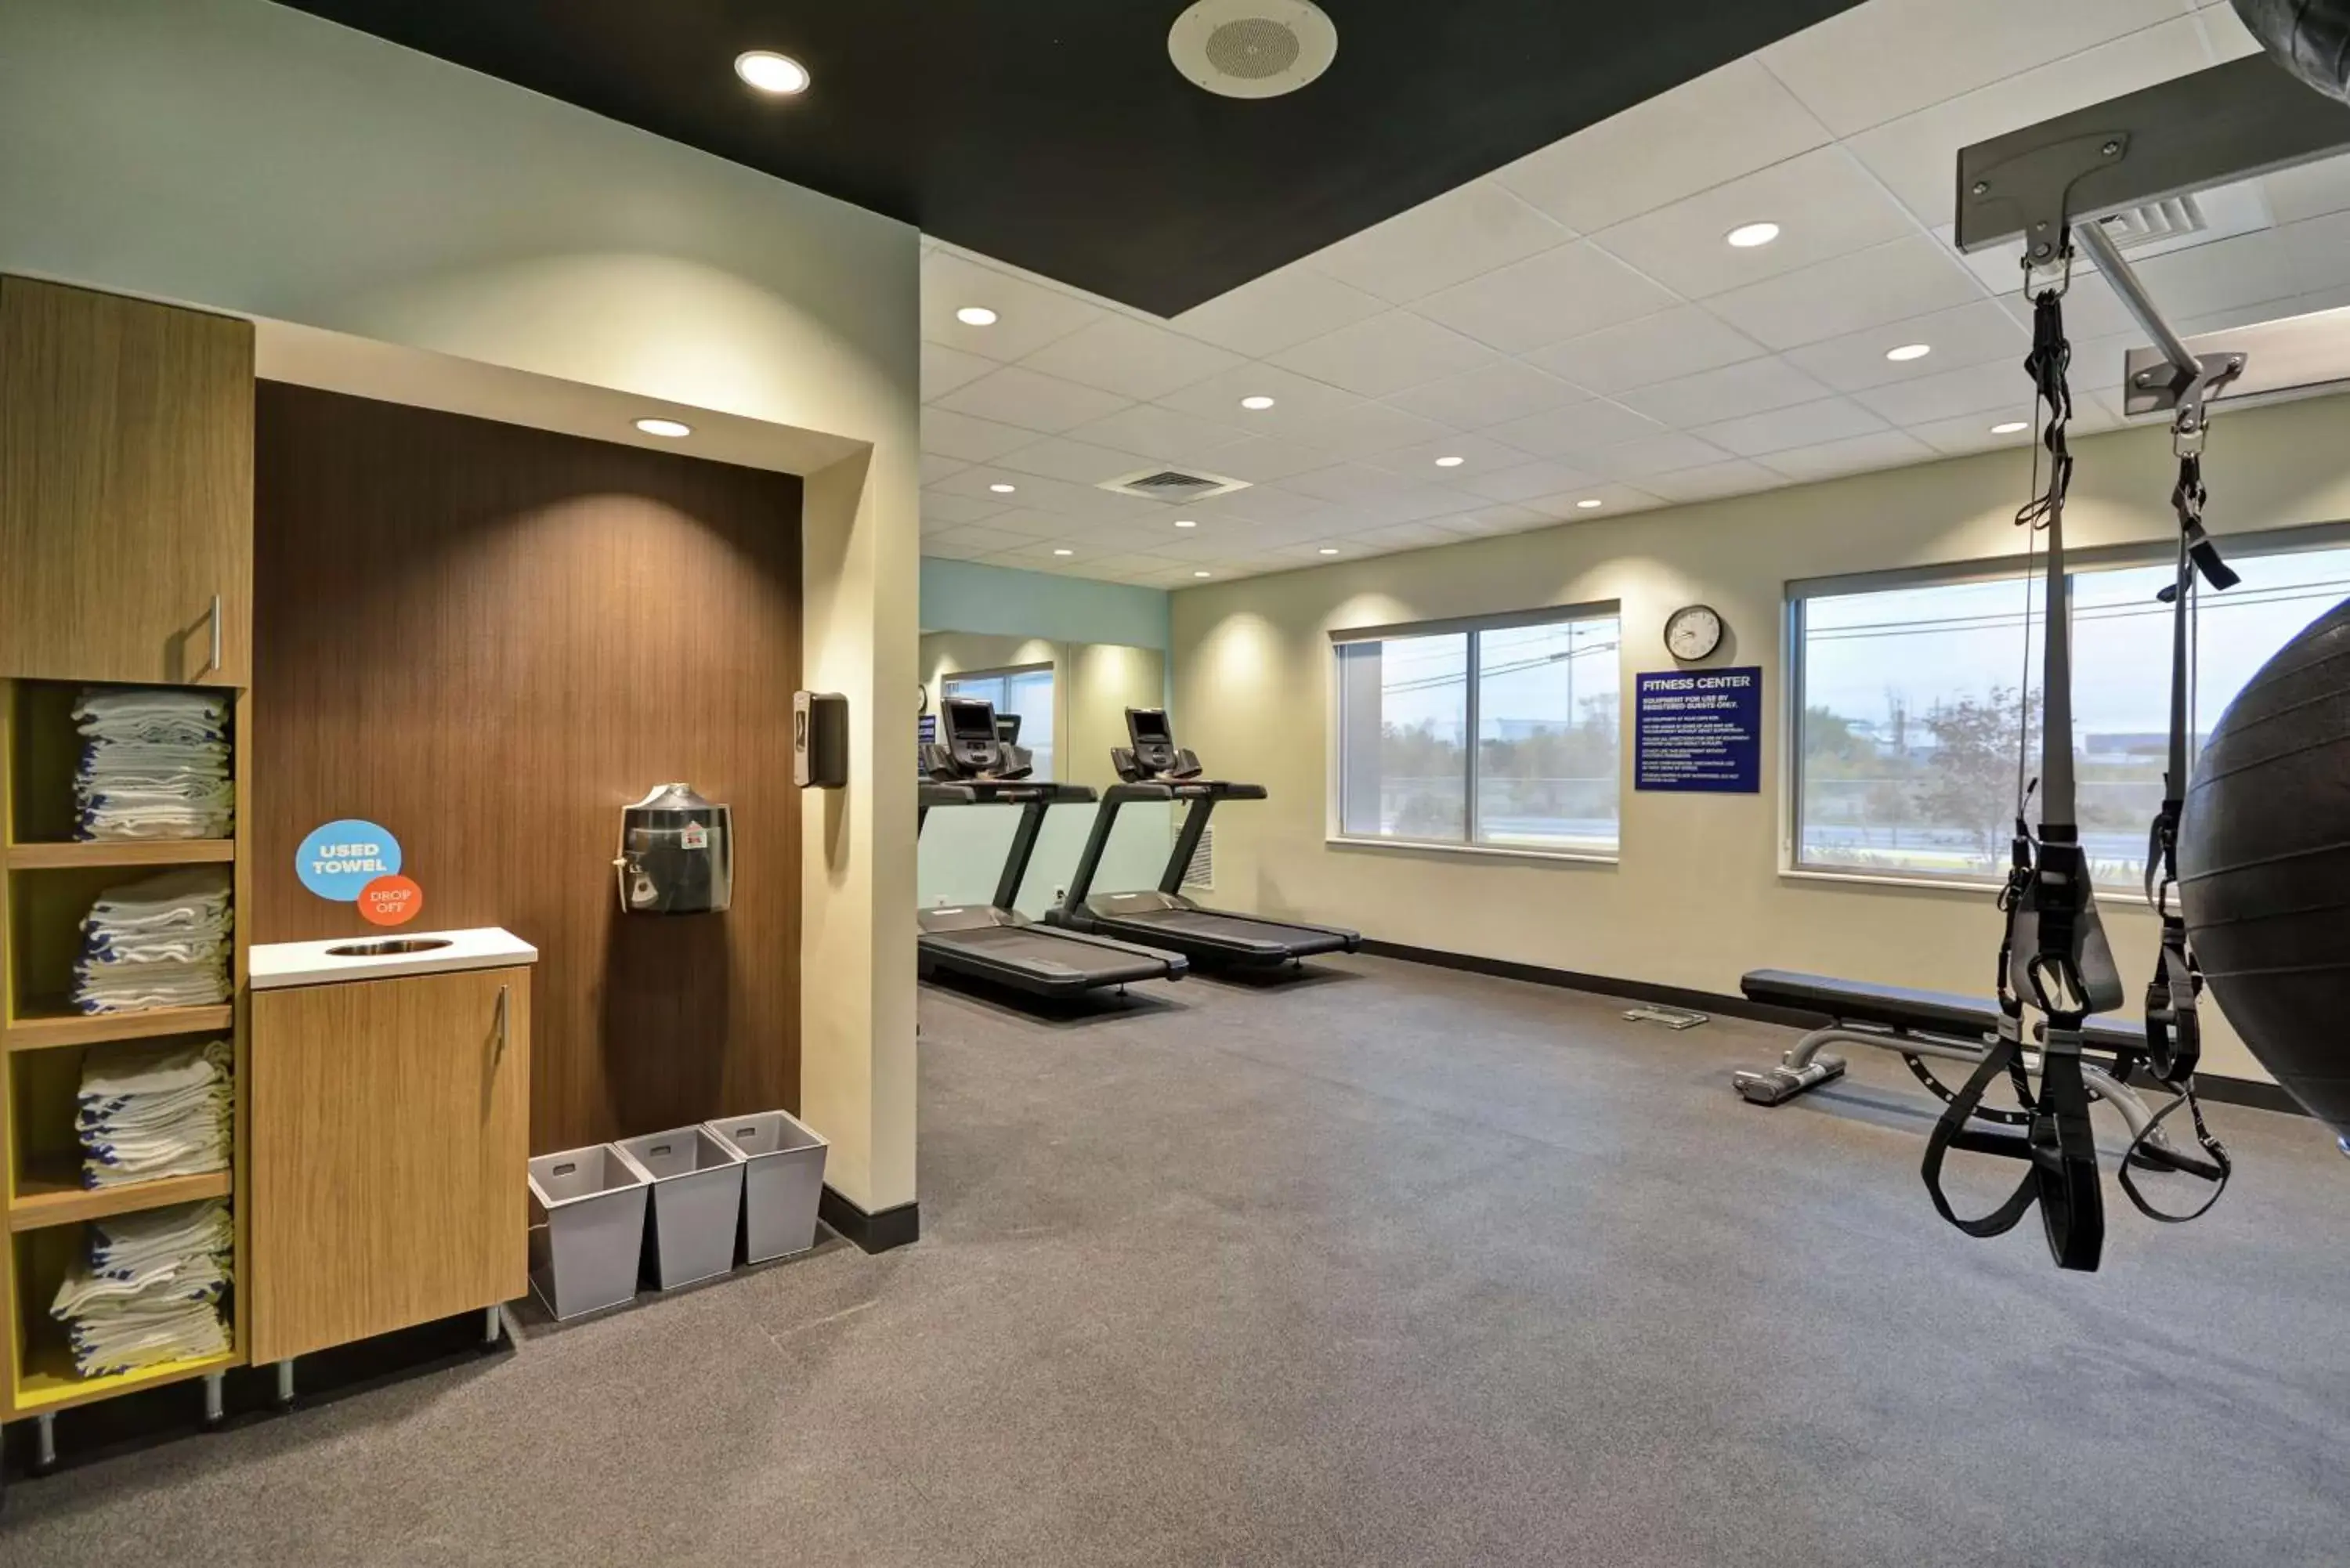 Fitness centre/facilities, Fitness Center/Facilities in Tru By Hilton Winchester, Va